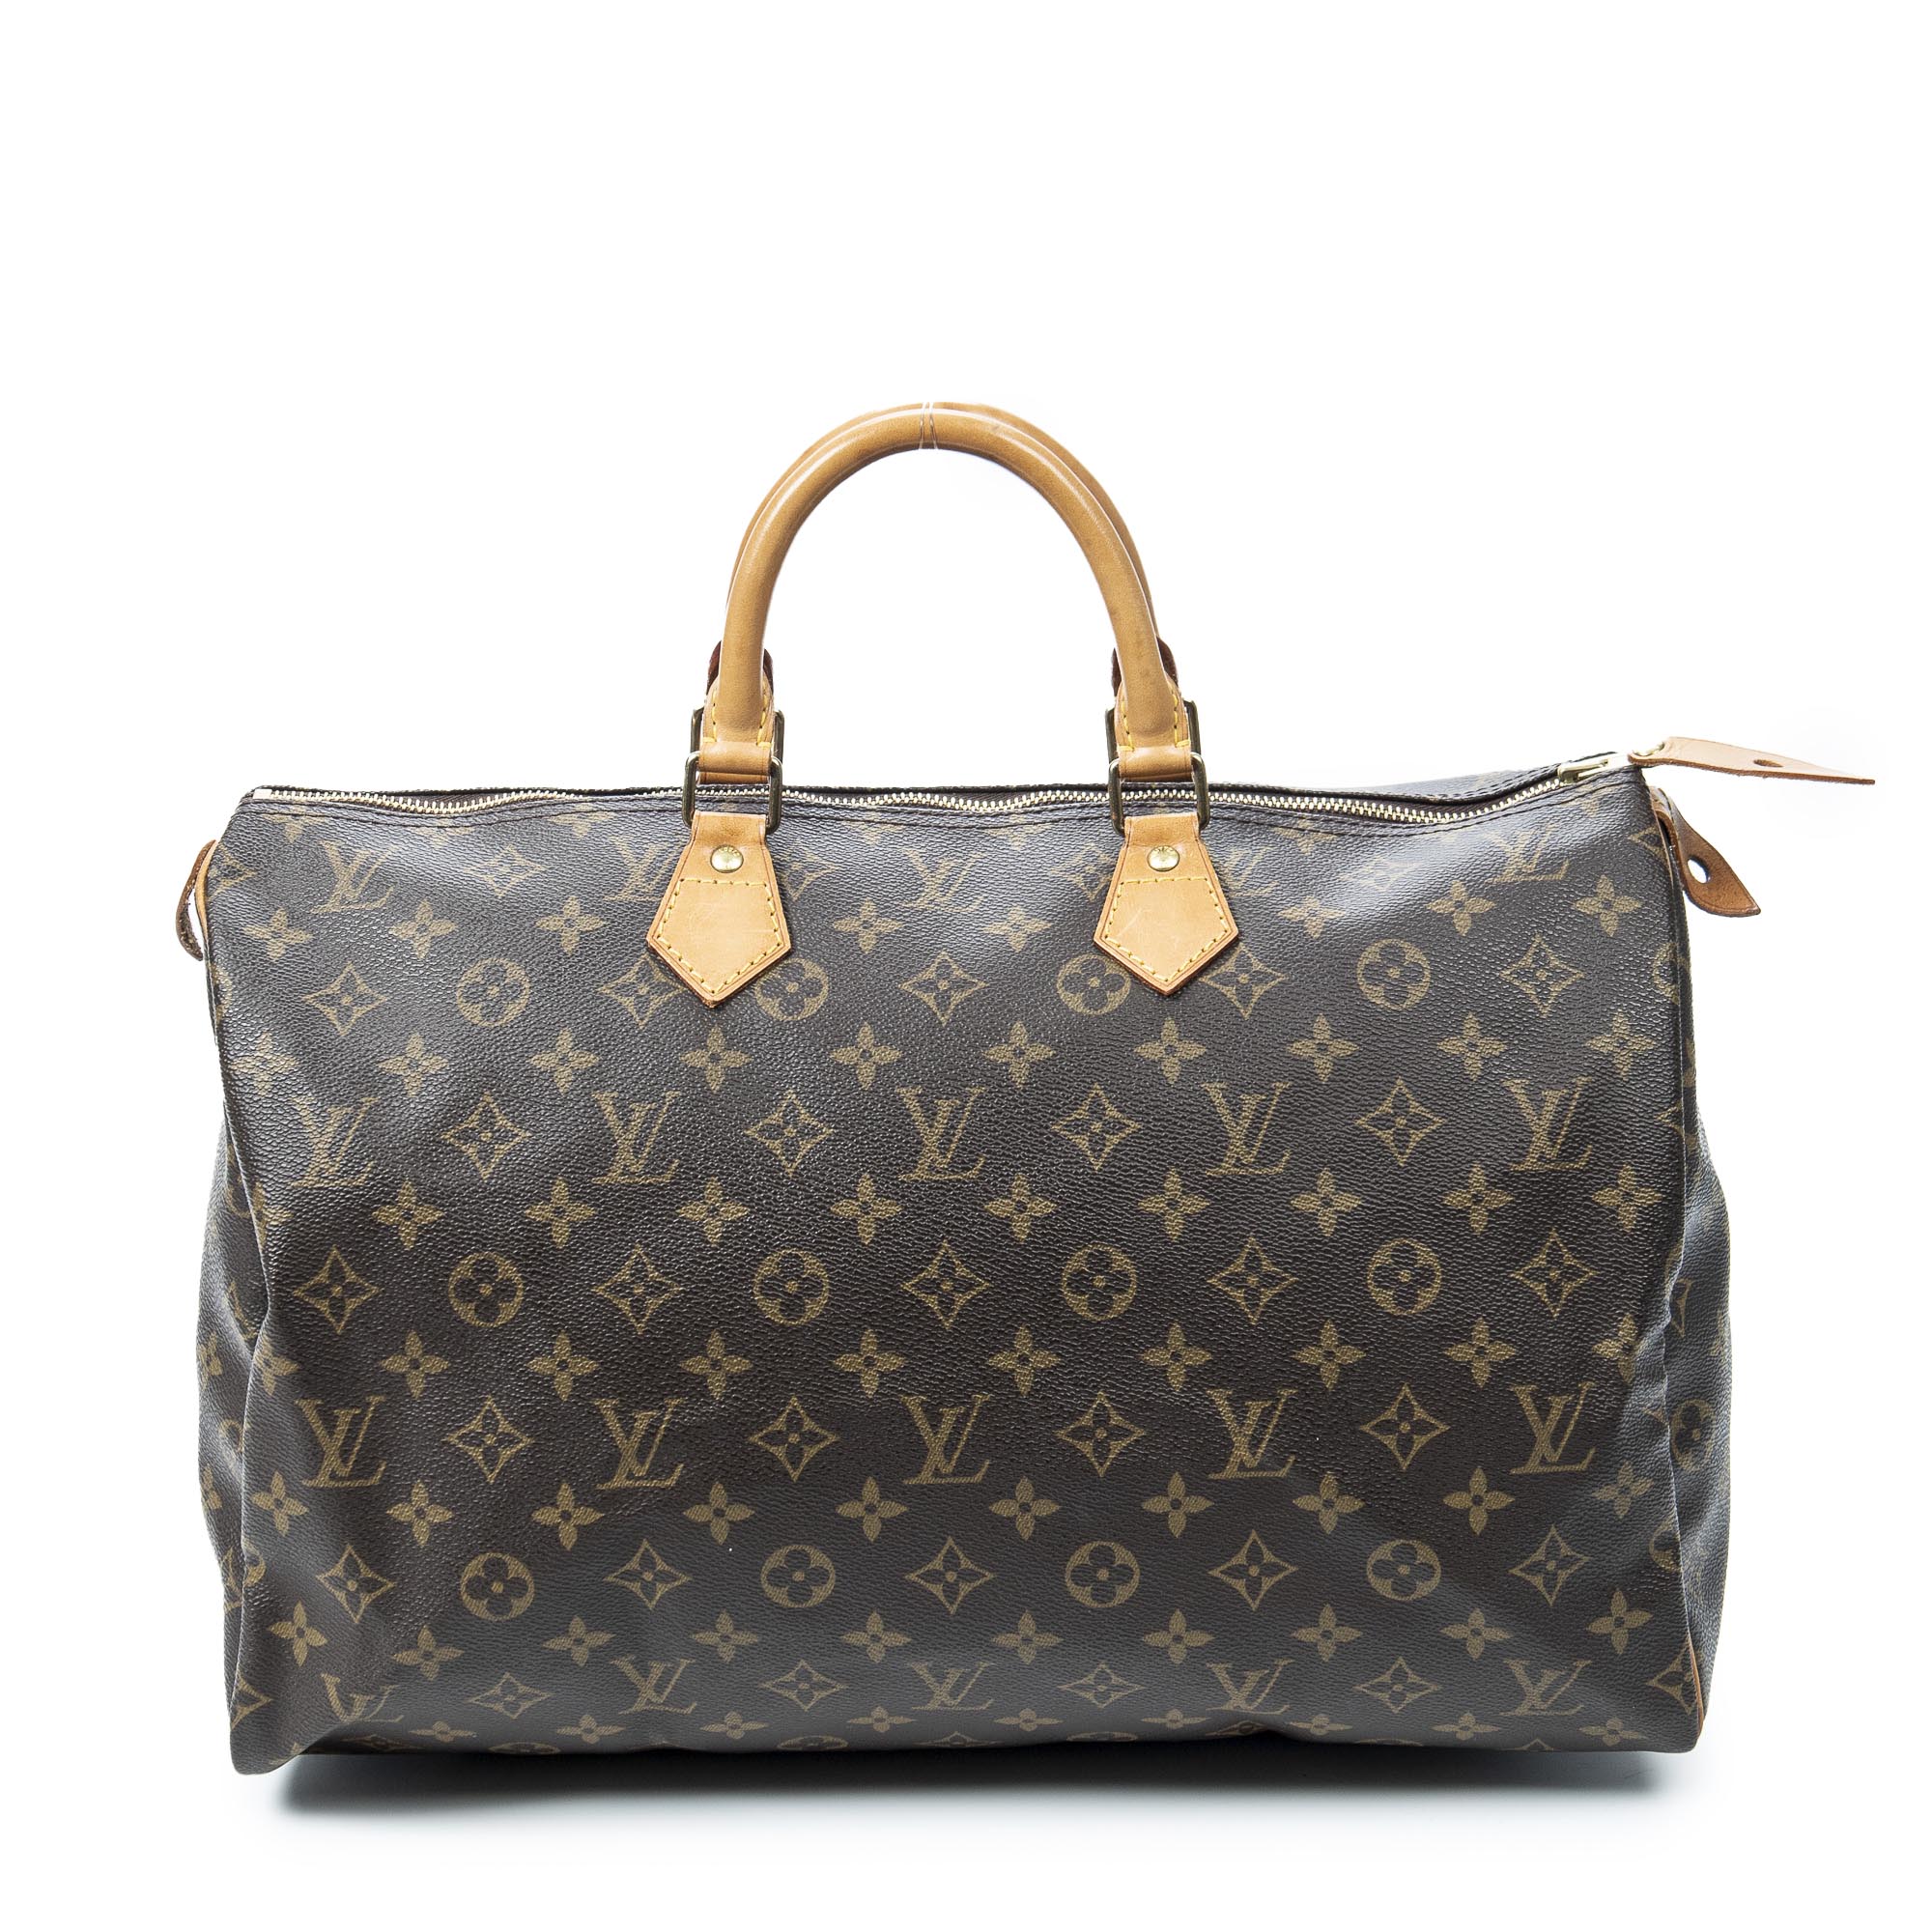 Louis Vuitton - Authenticated Speedy Handbag - Cloth Brown for Women, Very Good Condition